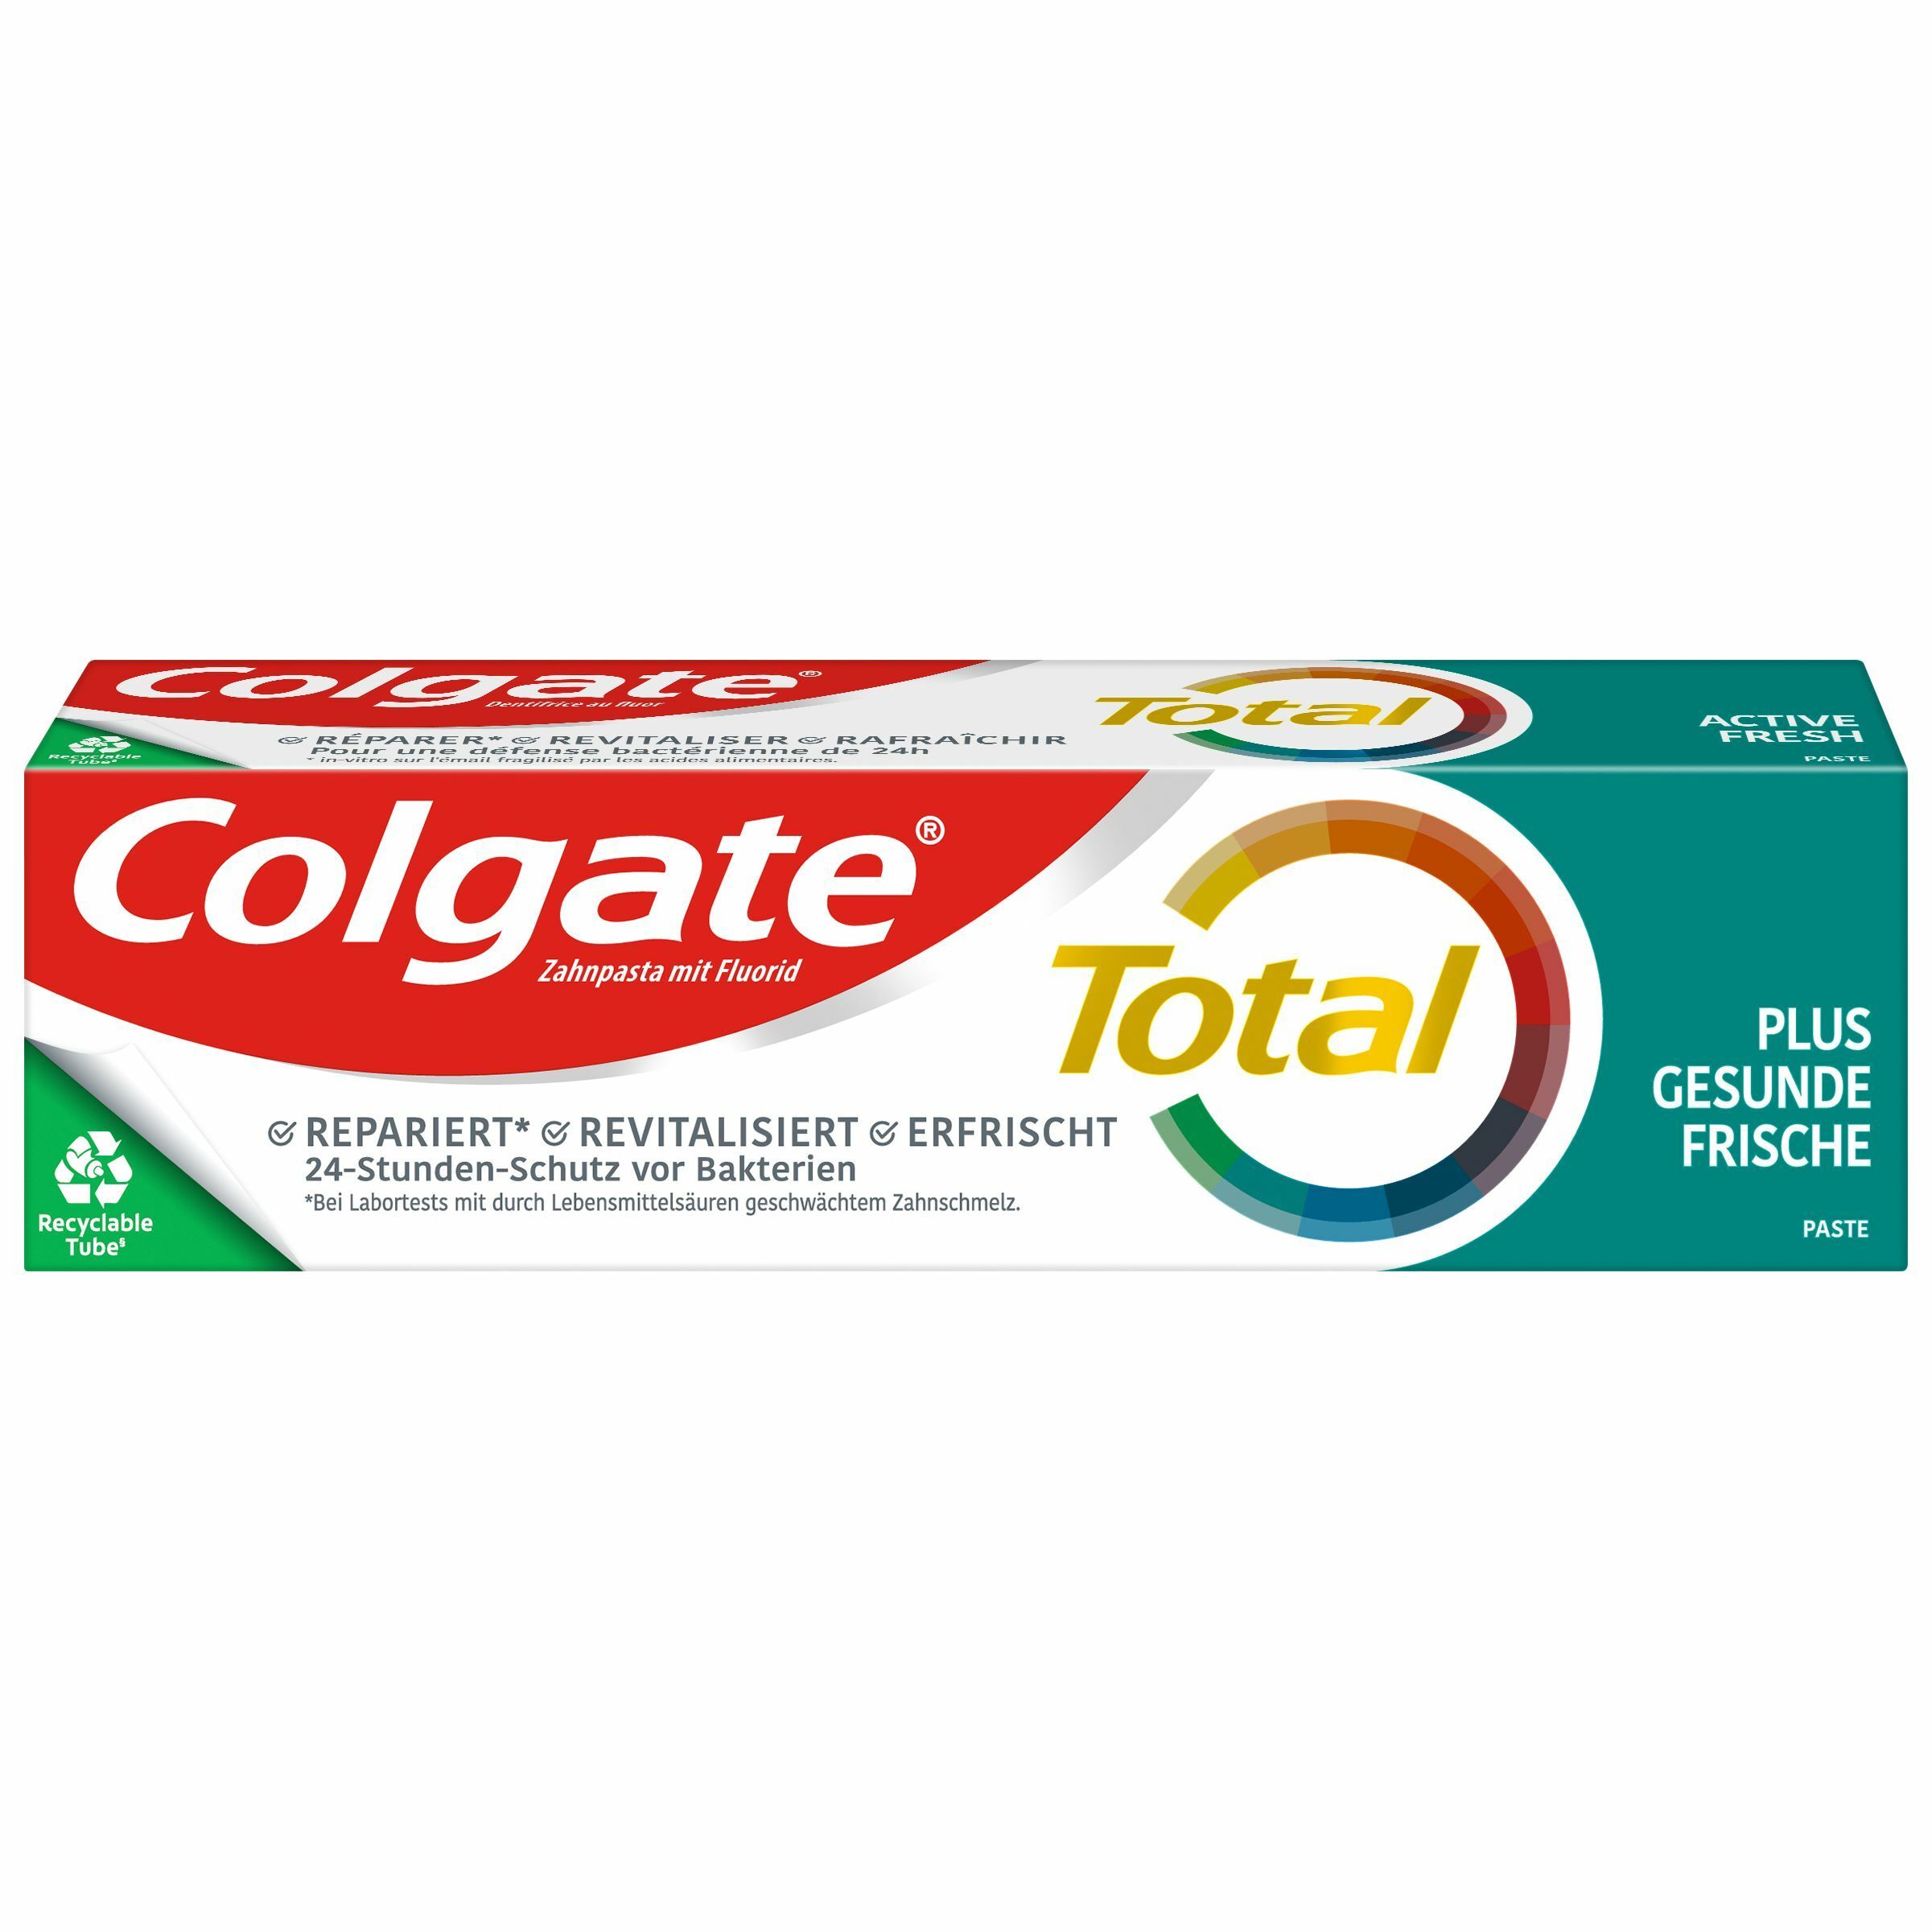 Image of Colgate Total Plus Gesunde Frische Zahnpasta